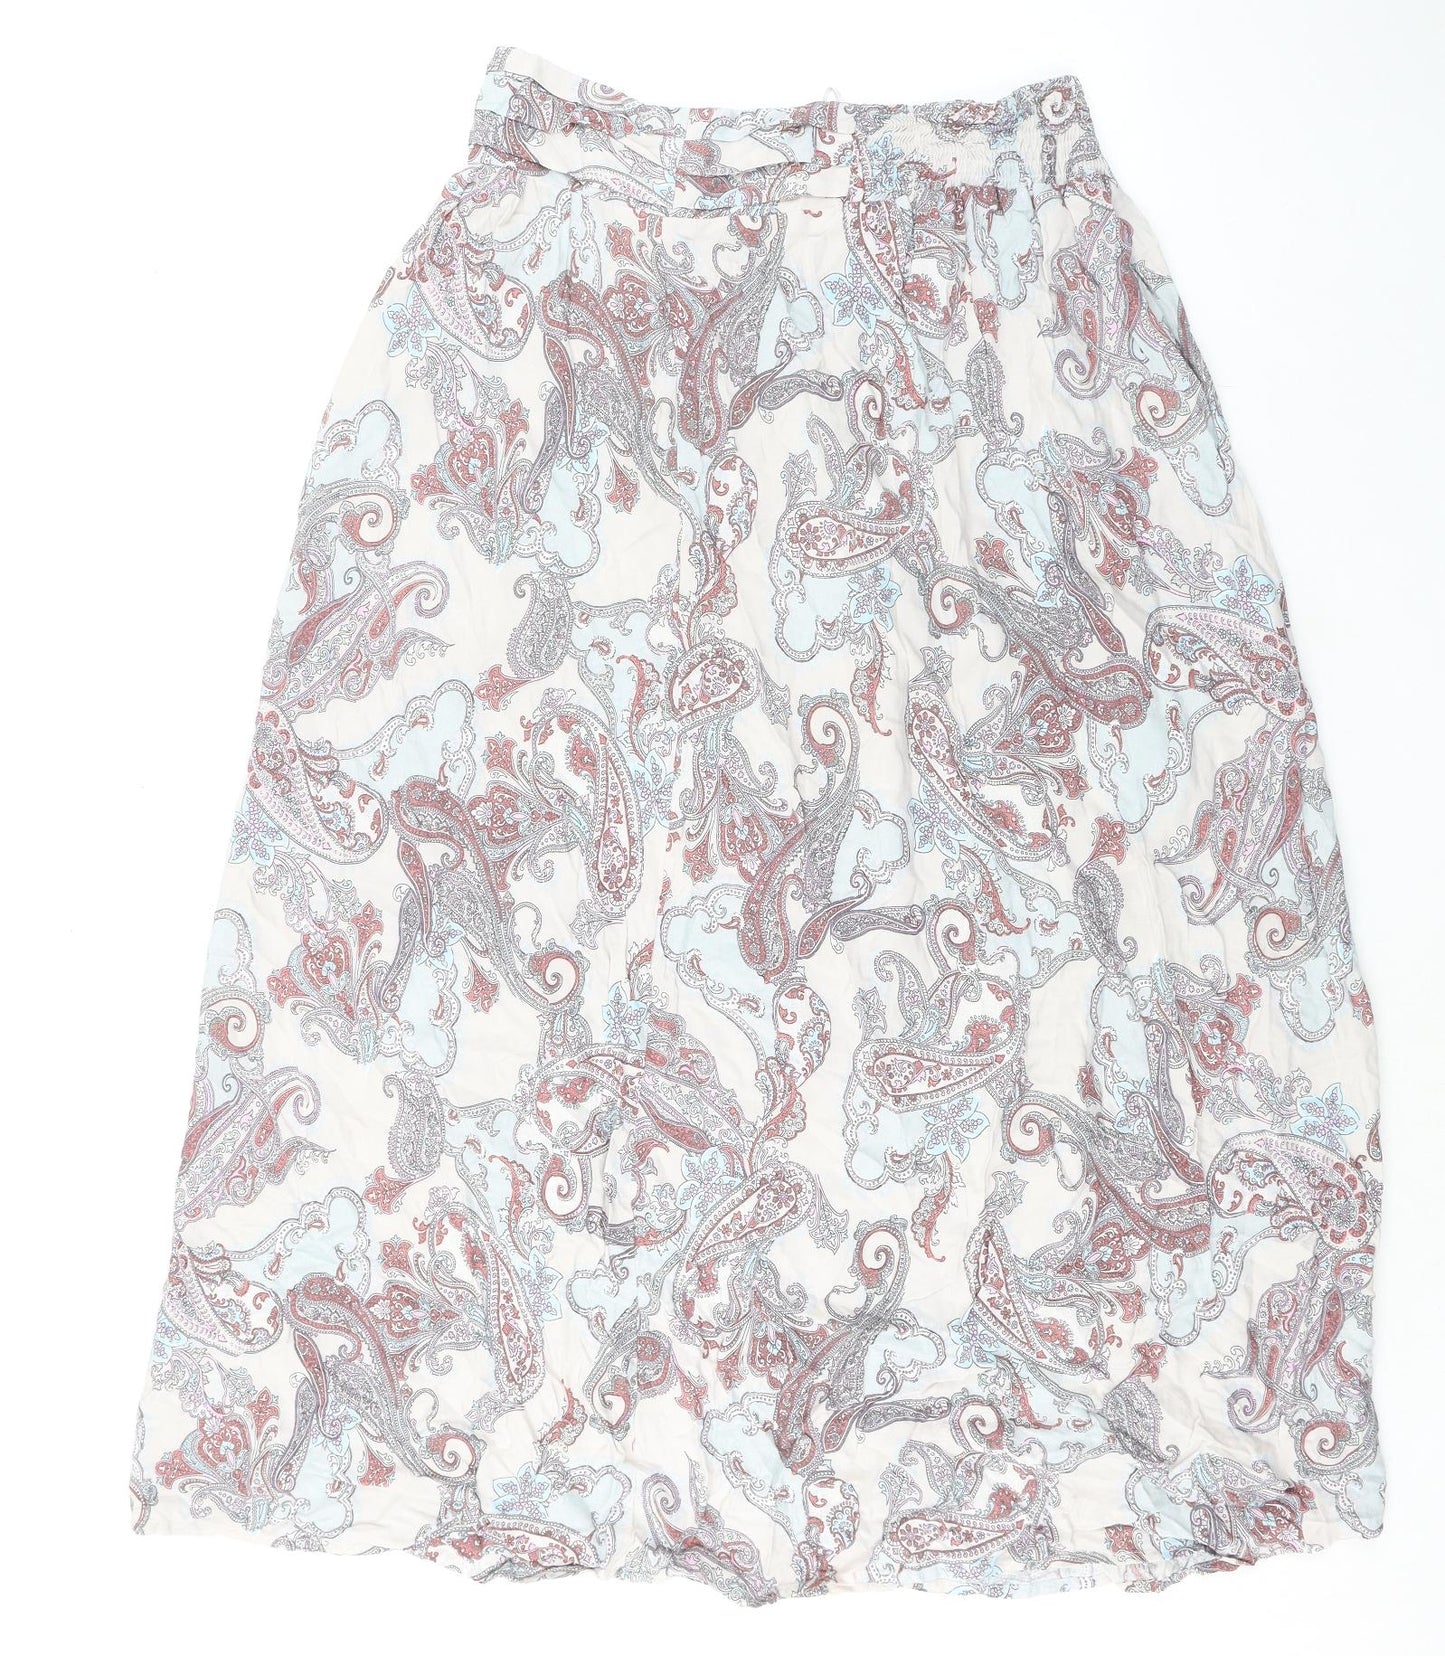 M&Co Womens Grey Paisley Viscose A-Line Skirt Size 12